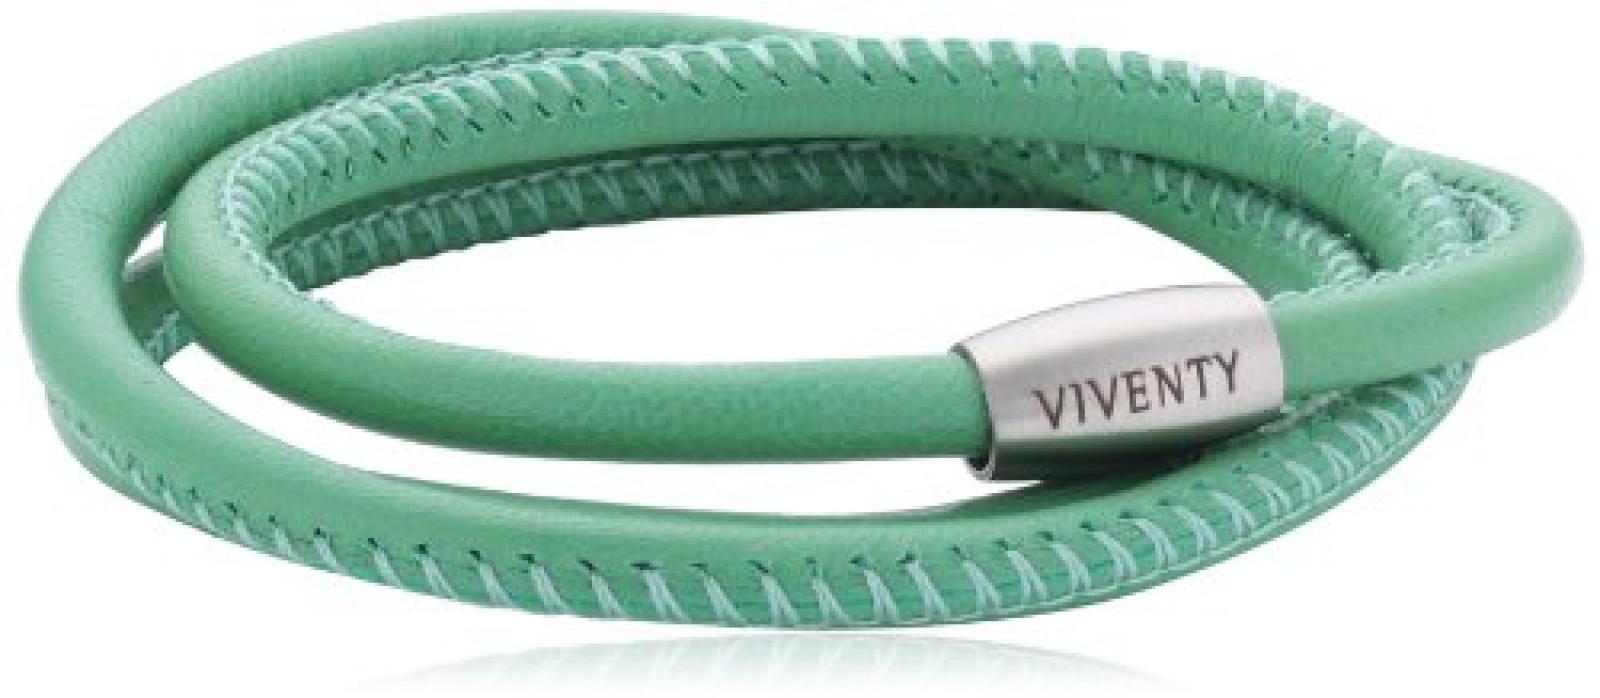 Viventy Unisex Armband Leder 3x gewickelt. in grün 59cm 764049 